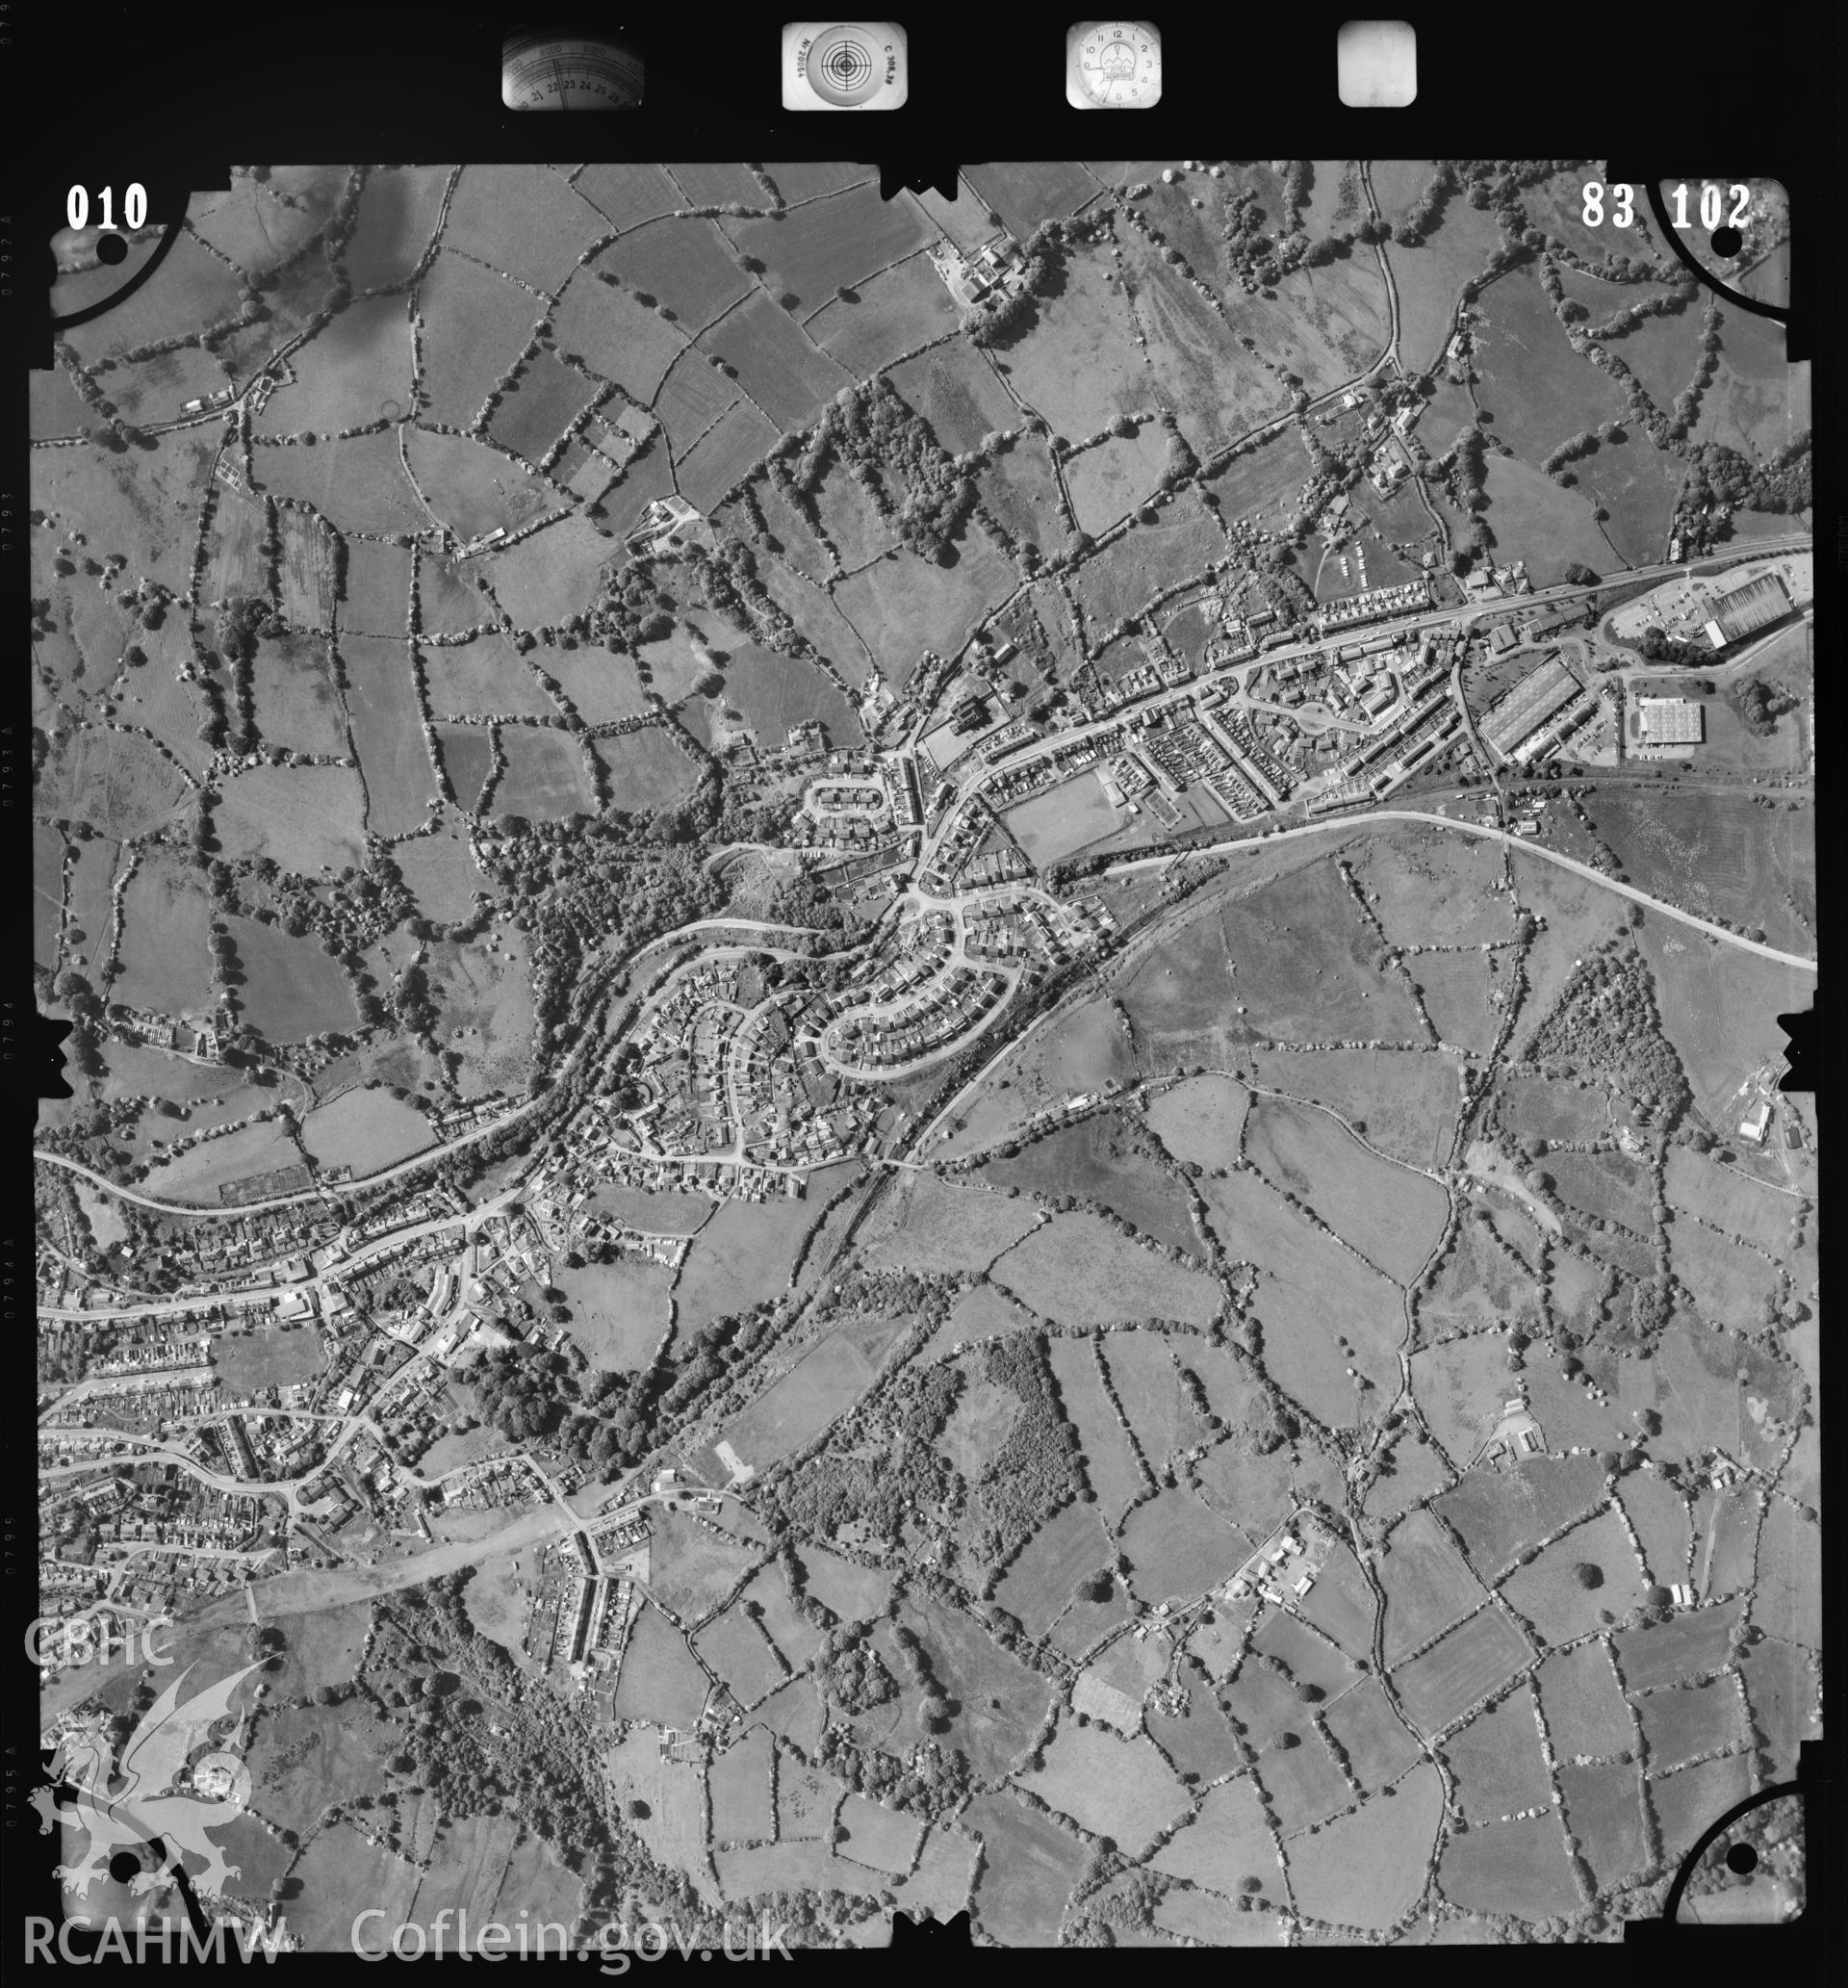 Digitized copy of an aerial photograph showing the area around Pentwynmawr, Newbridge. ST193961, taken by Ordnance Survey, 1983.